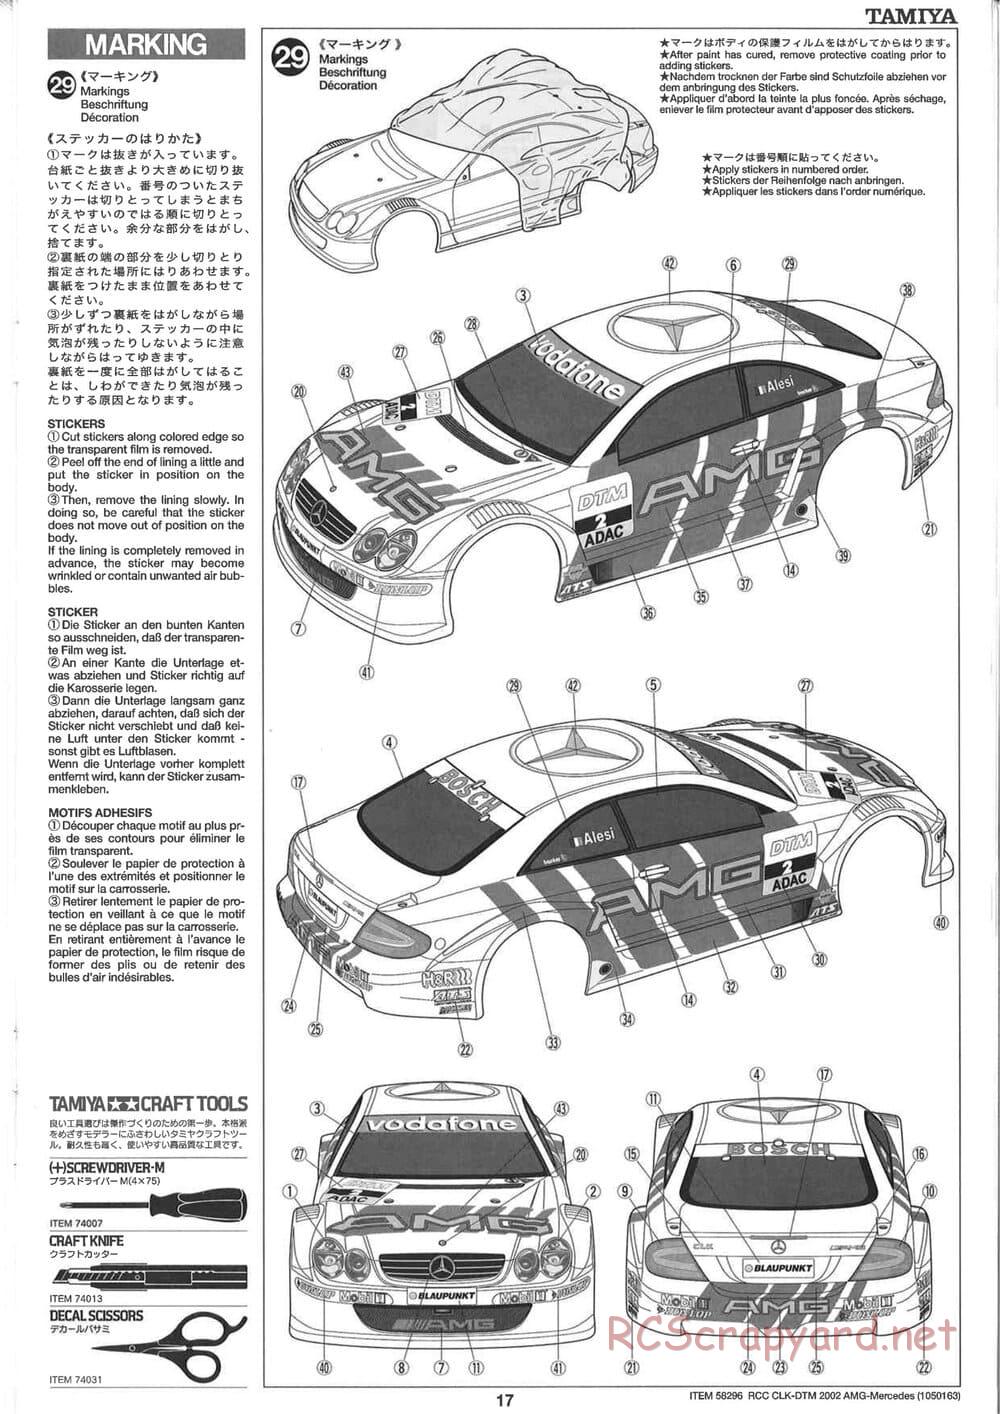 Tamiya - CLK DTM 2002 AMG Mercedes - TL-01 LA Chassis - Manual - Page 17